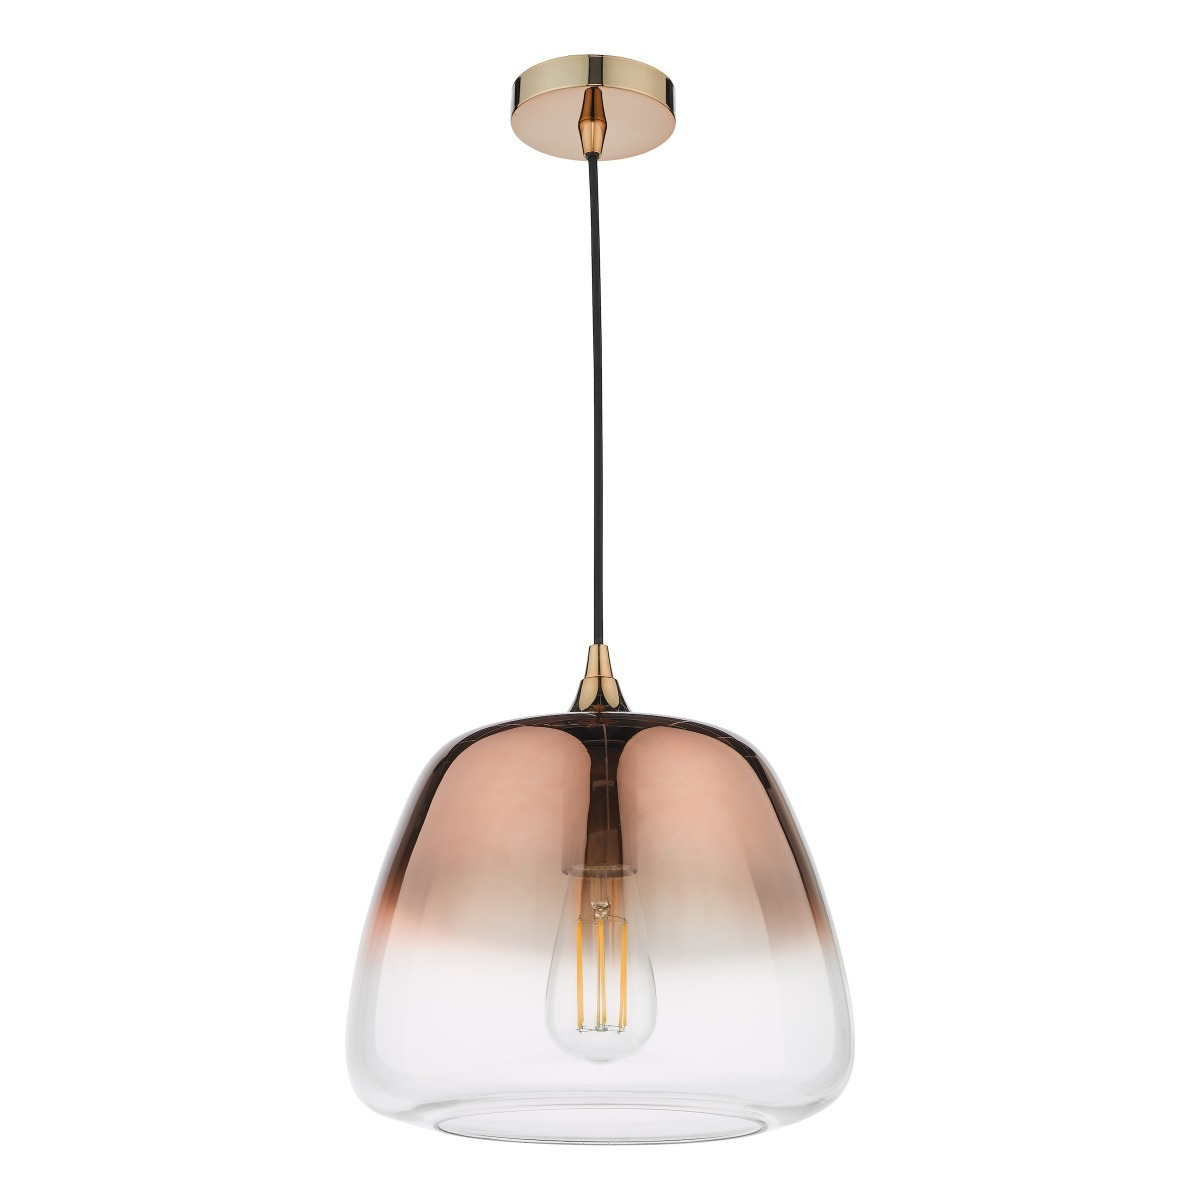 Dar Lighting Klaxon Single Ceiling Pendant In Copper Finish With Copper Ombre Glass